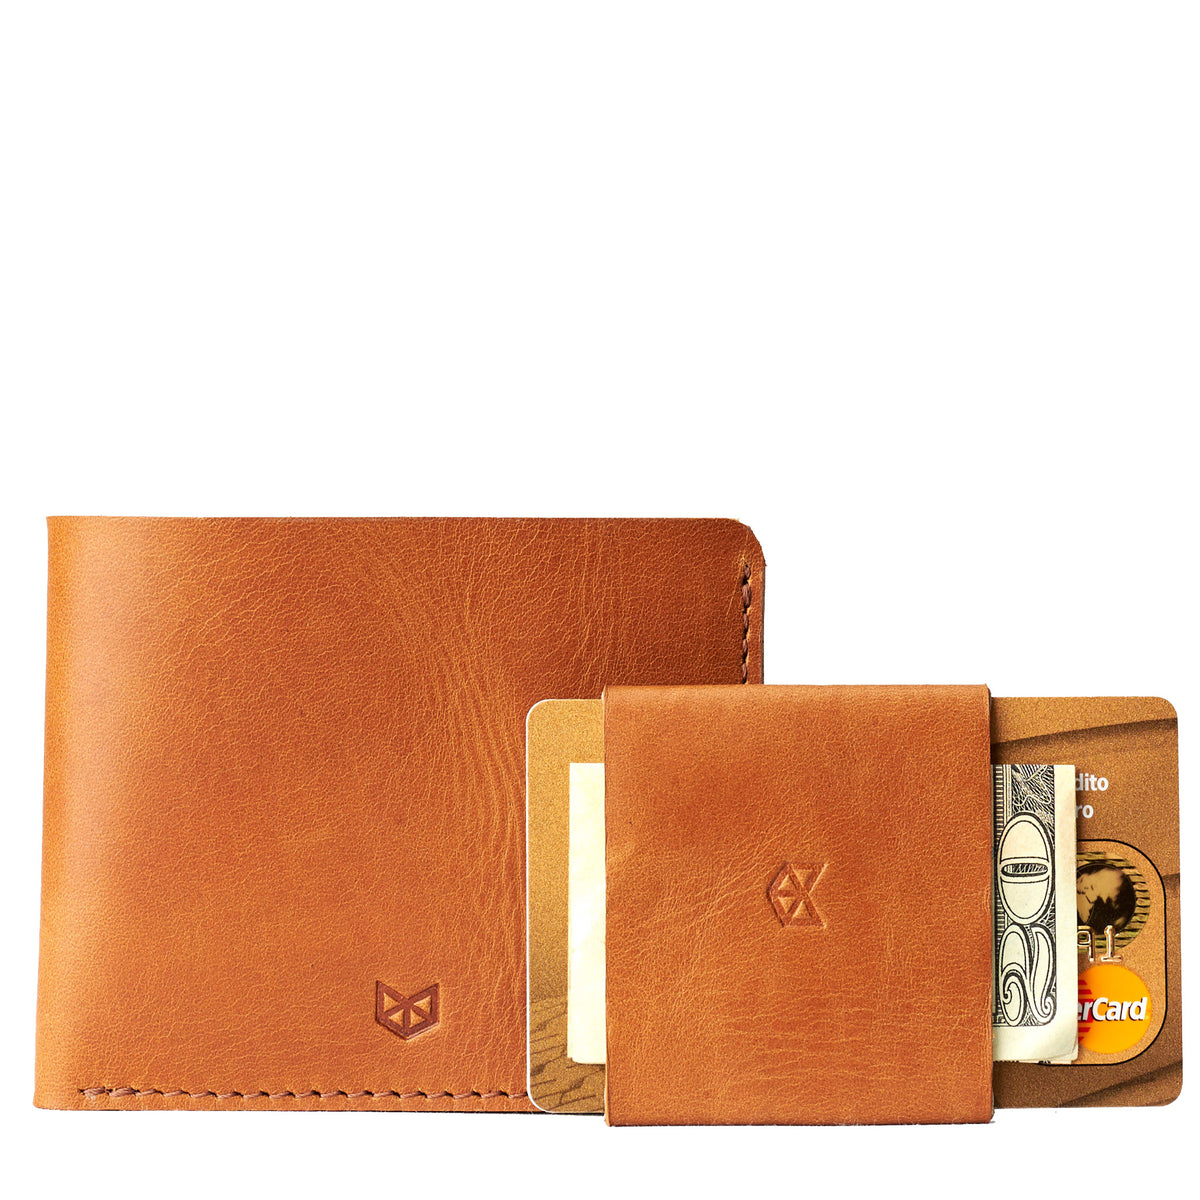 Wallet kit. Leather Habana slim wallet gifts for men handmade accessories. minimalist full grain leather thin wallet. Made by Capra Leather. 